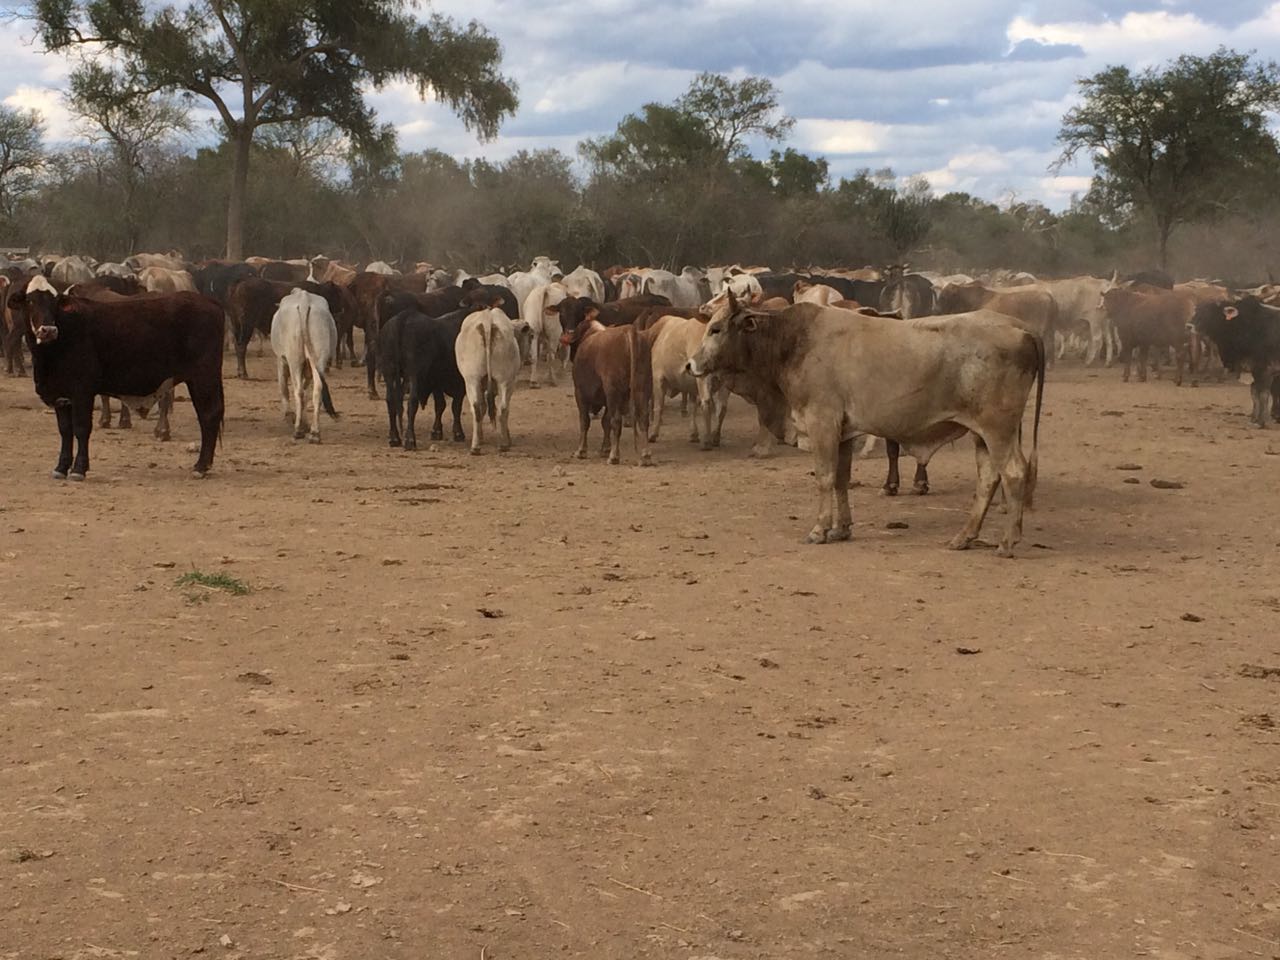 Paraguay cattle raising opportunity - cattle in field 3